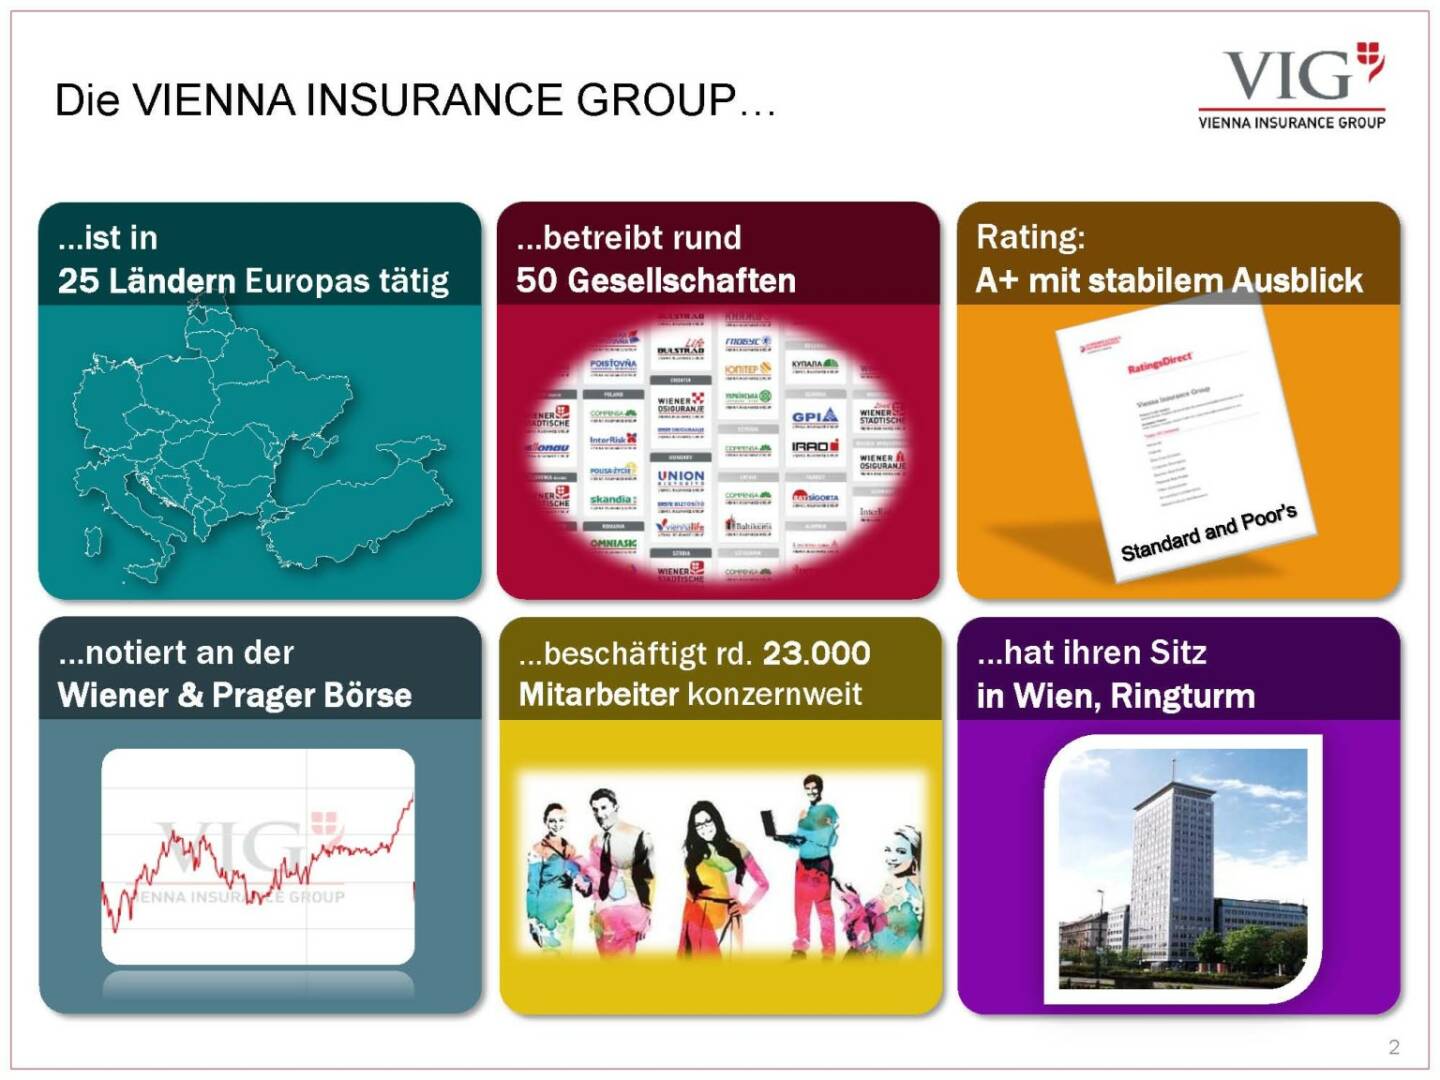 Vienna Insurance Group - Die Vienna Insurance Group, VIG